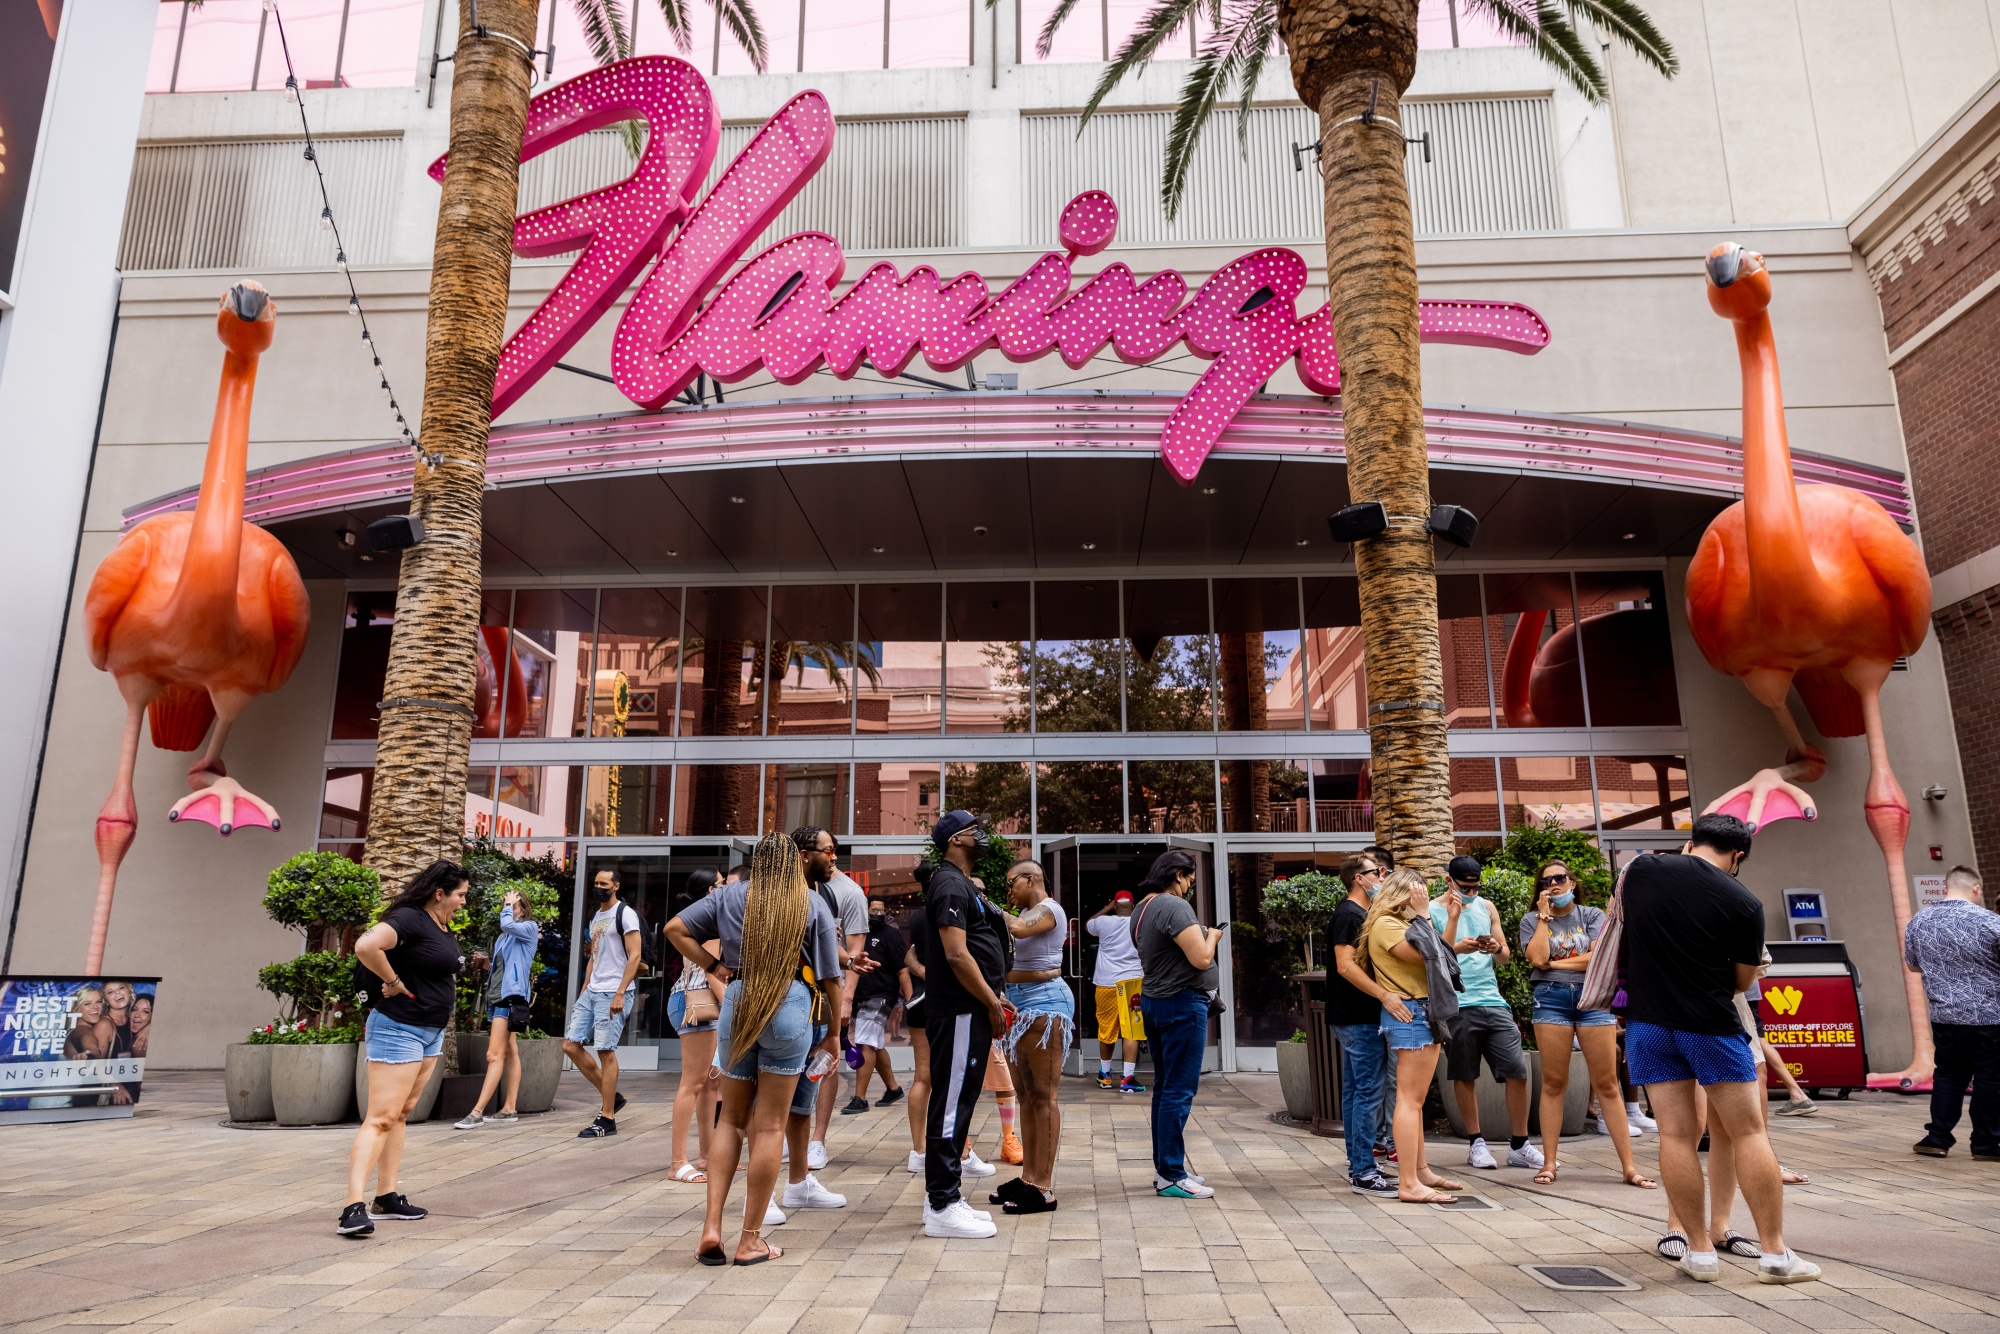 Caesars Seeks Over $1 Billion for Famed Las Vegas Flamingo Hotel - Bloomberg